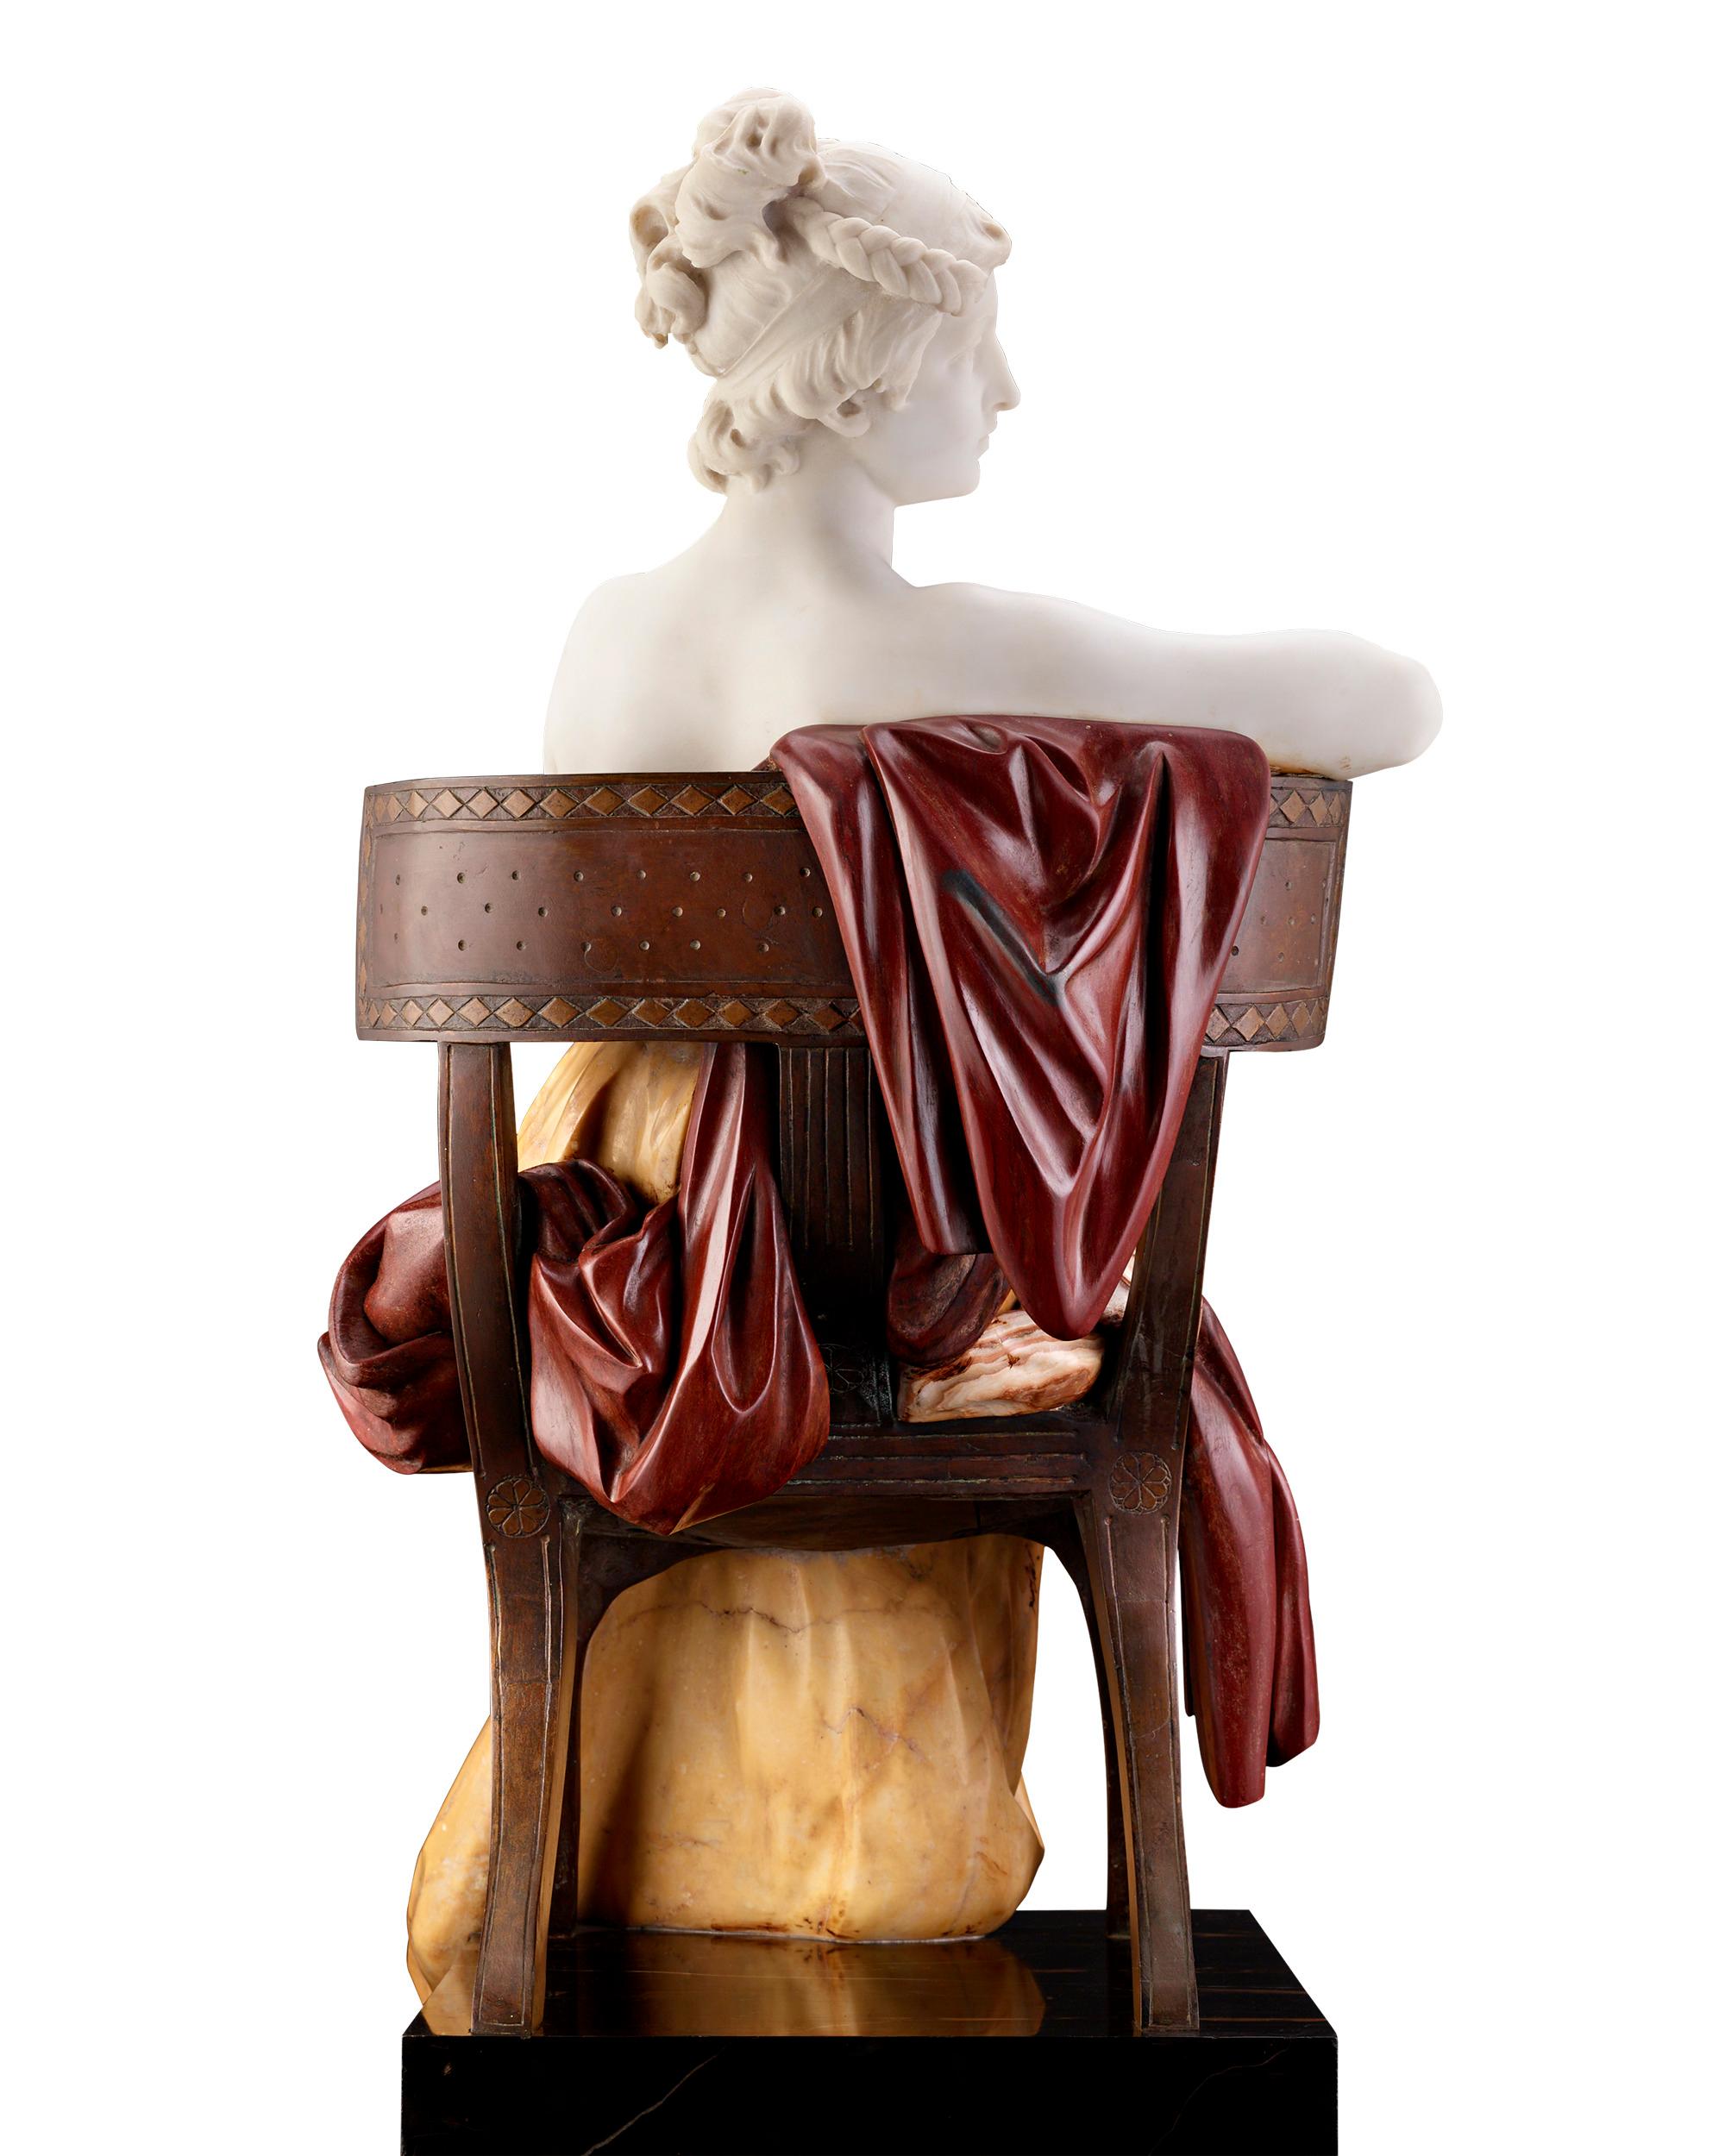 Ferdinando Vichi Figurative Sculpture - Inspiration